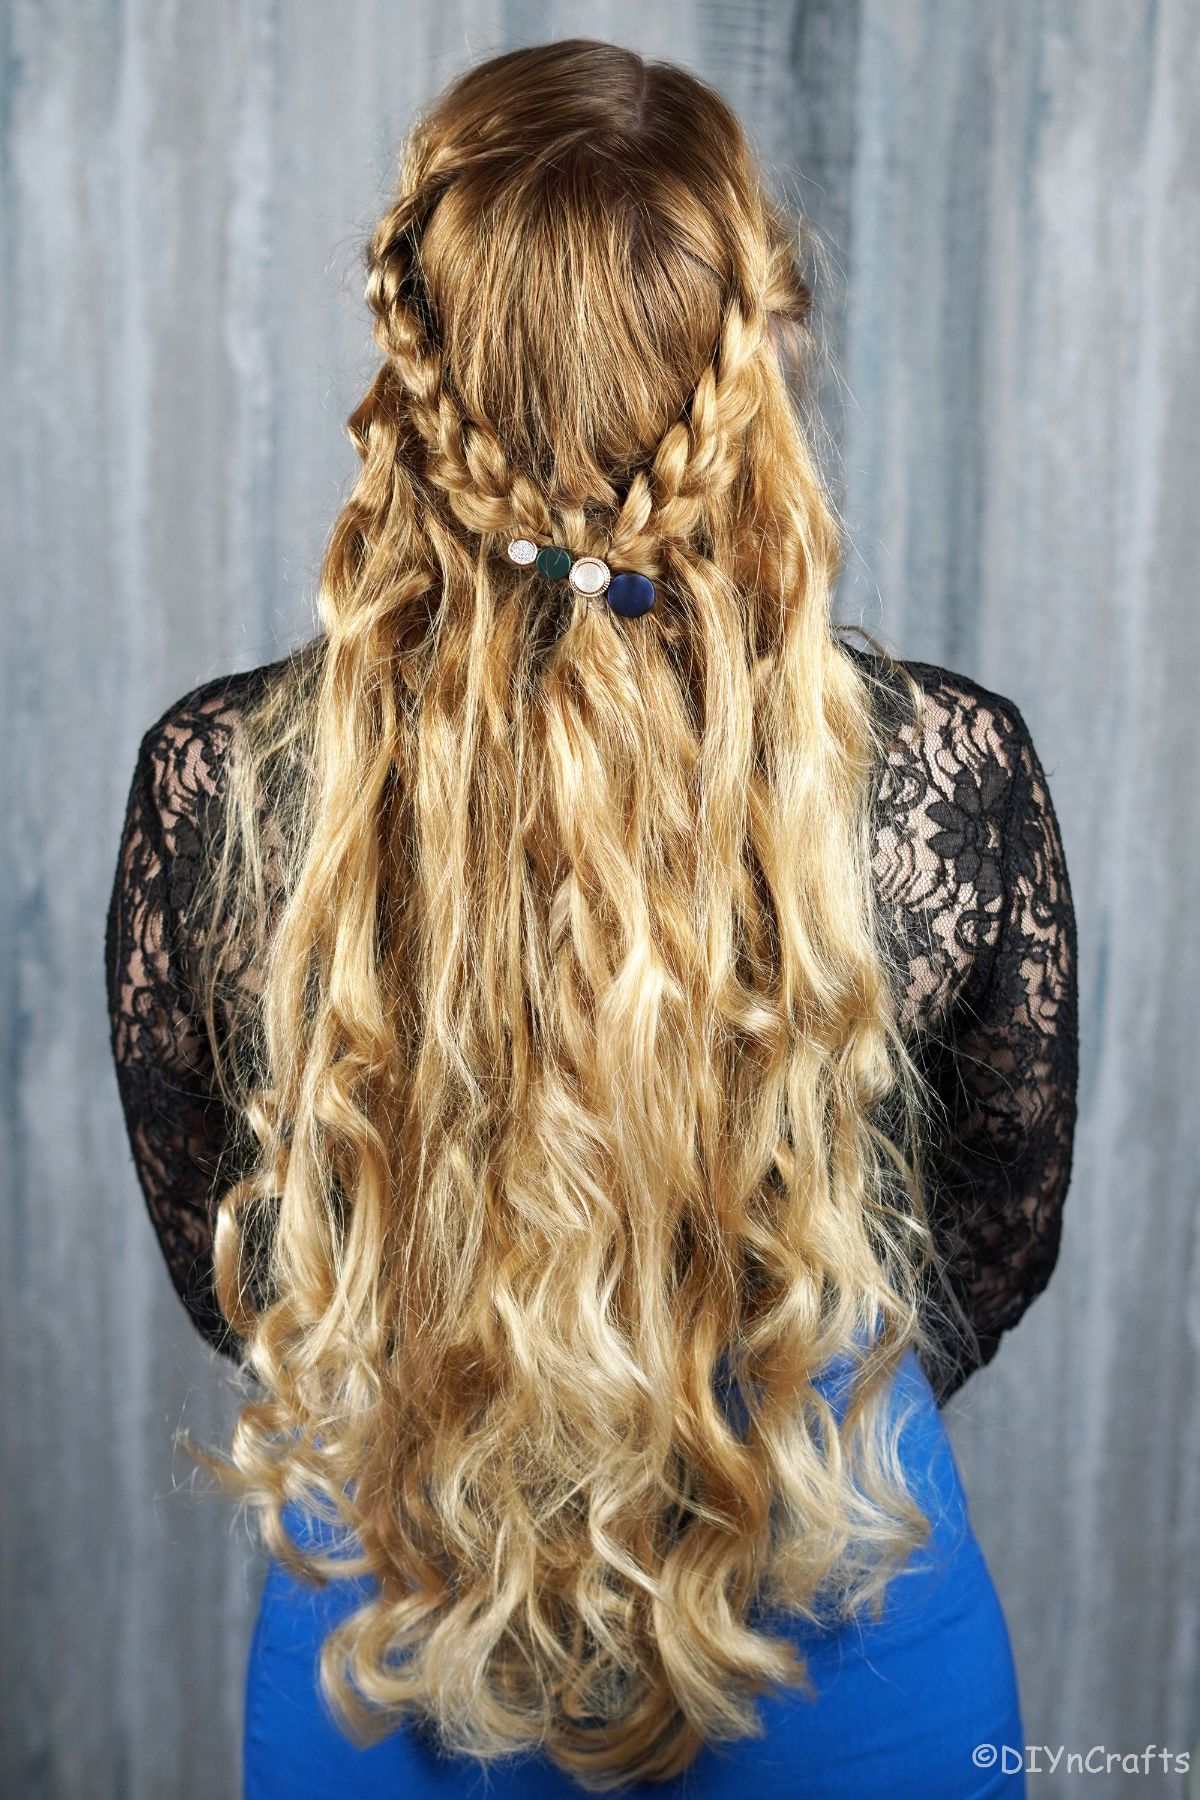 Braided Crown Half Up Half Down Hairstyle - DIY & Crafts